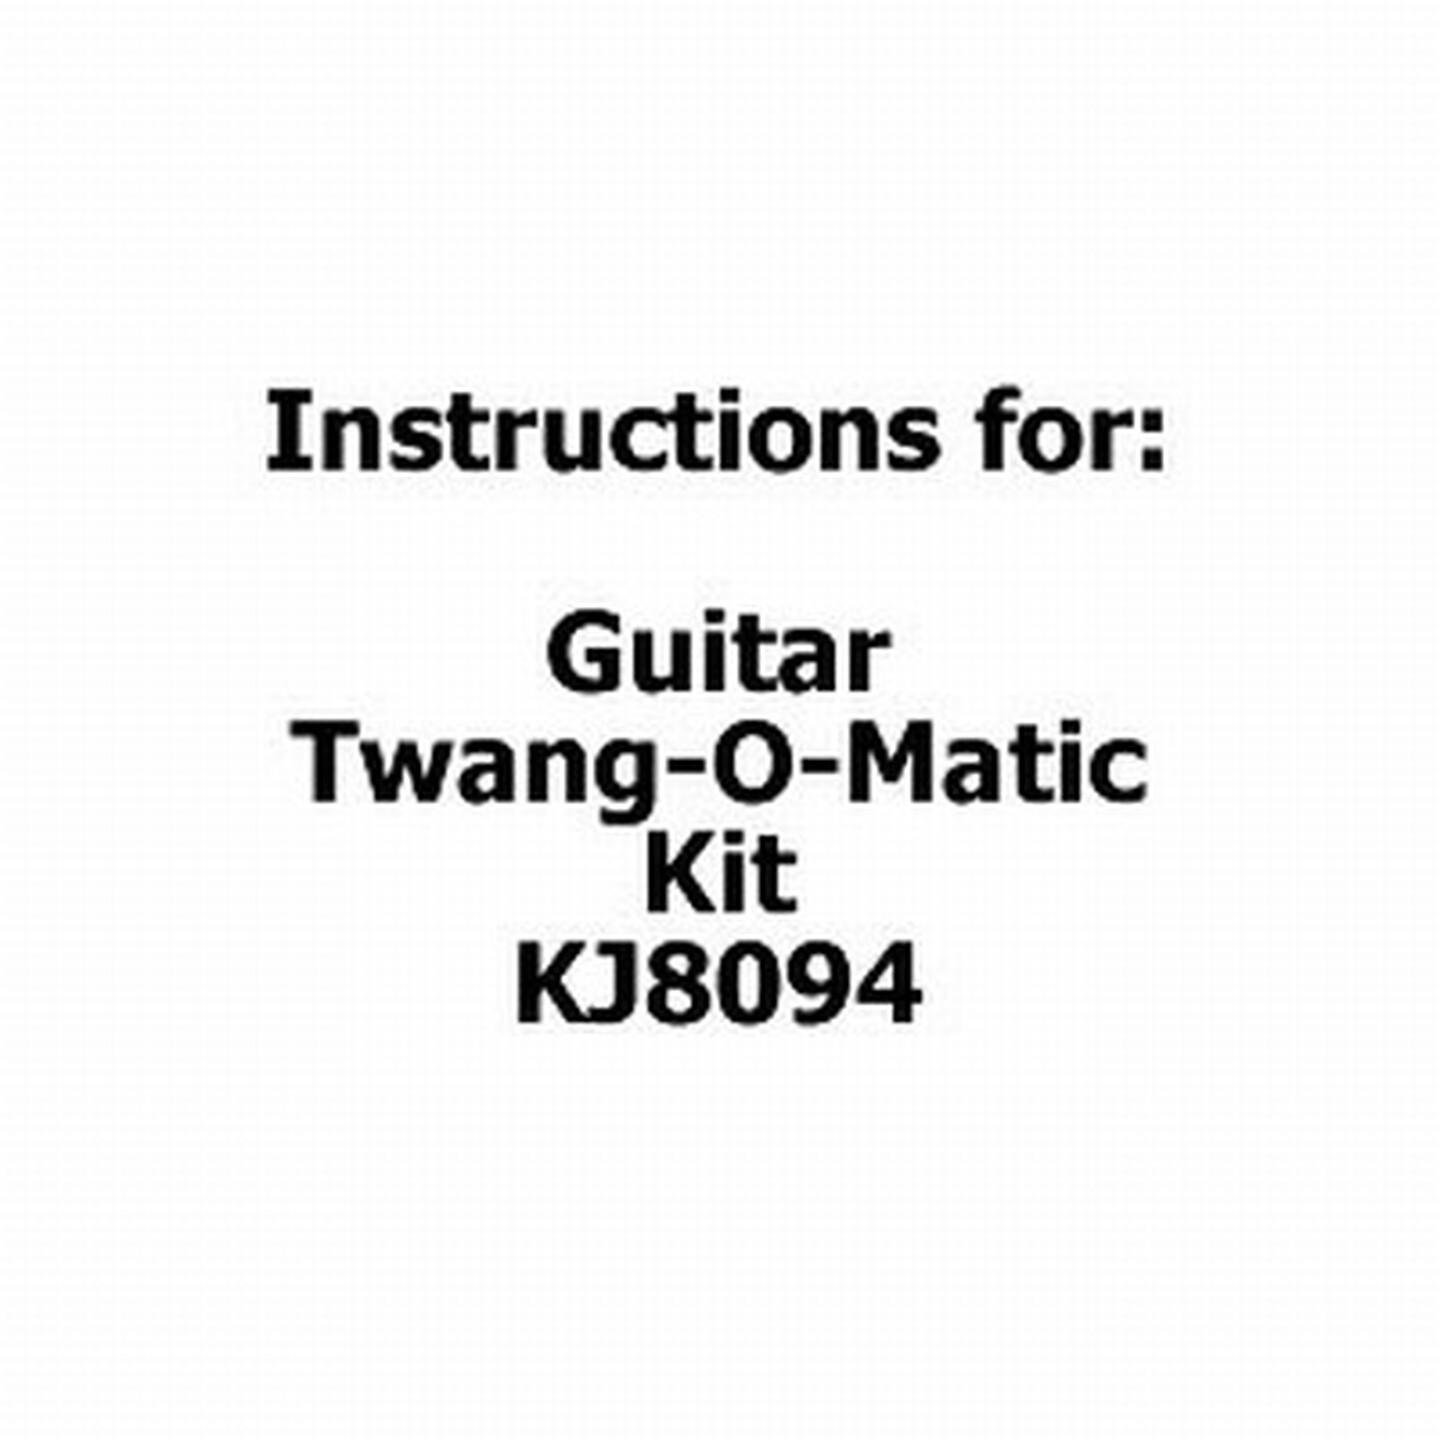 Instructions for Guitar Twang-O-Matic Kit KJ8094